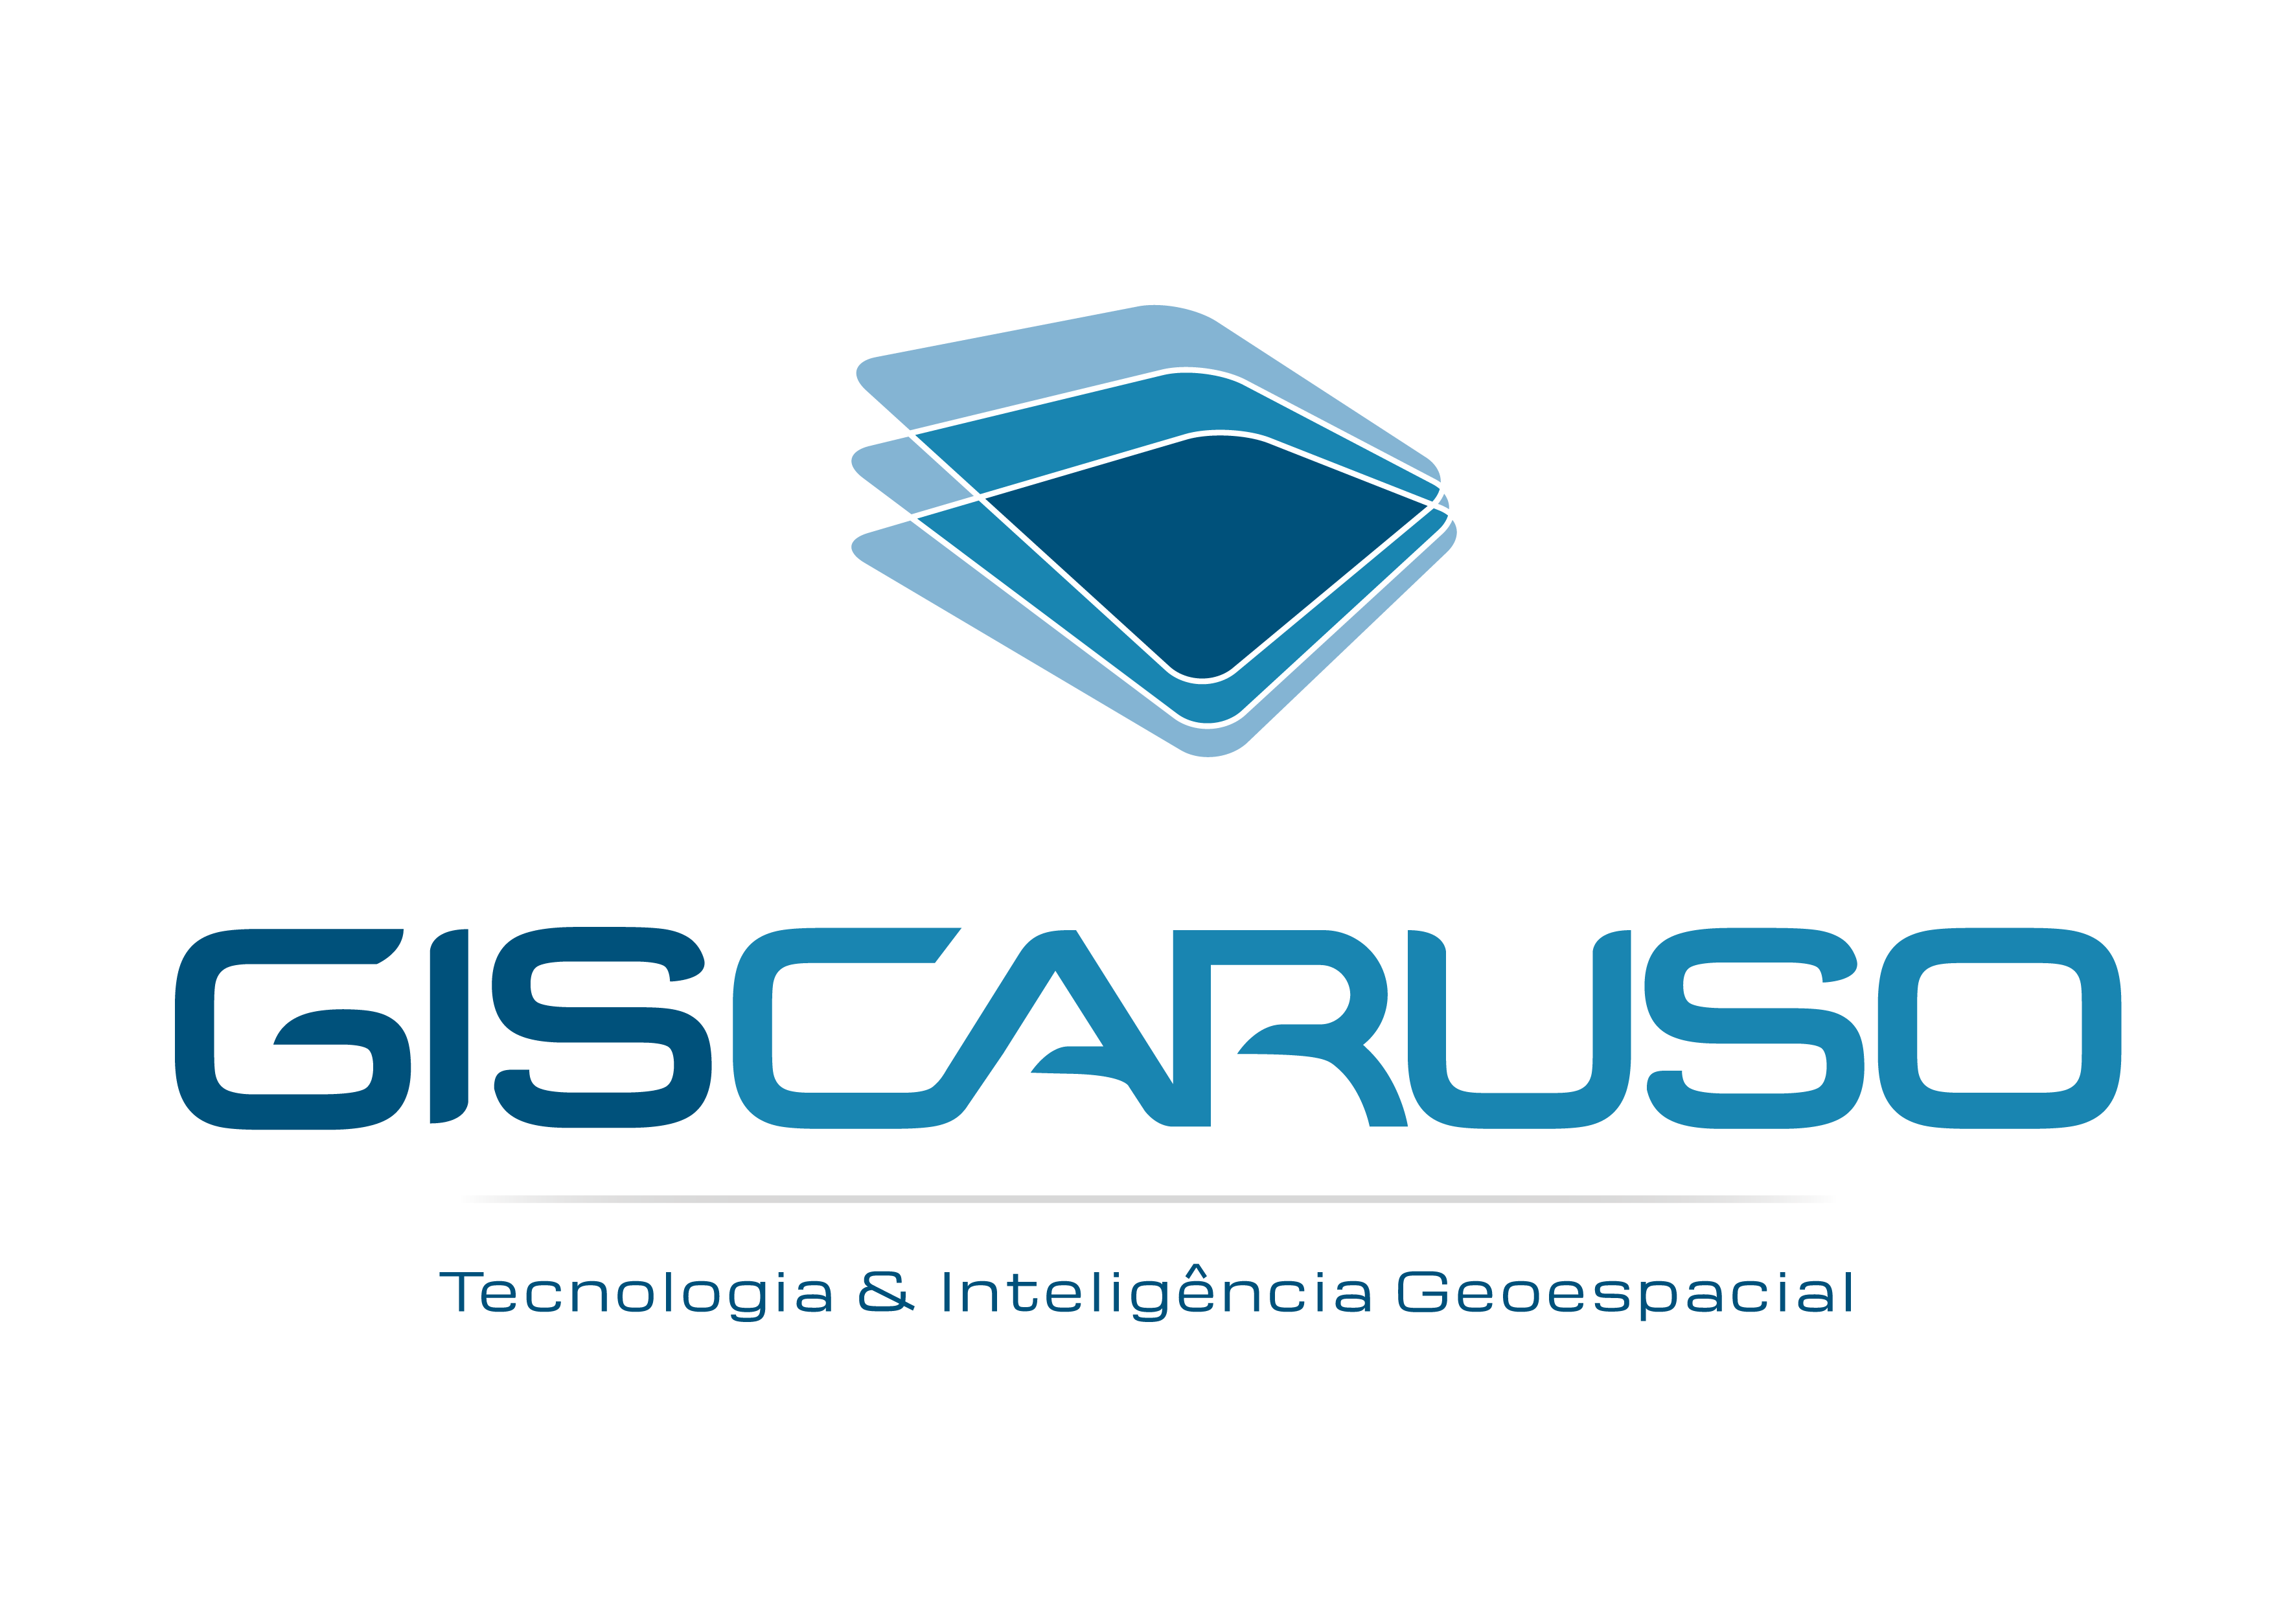 GISCARUSO Tecnologia & Inteligência Geoespacial